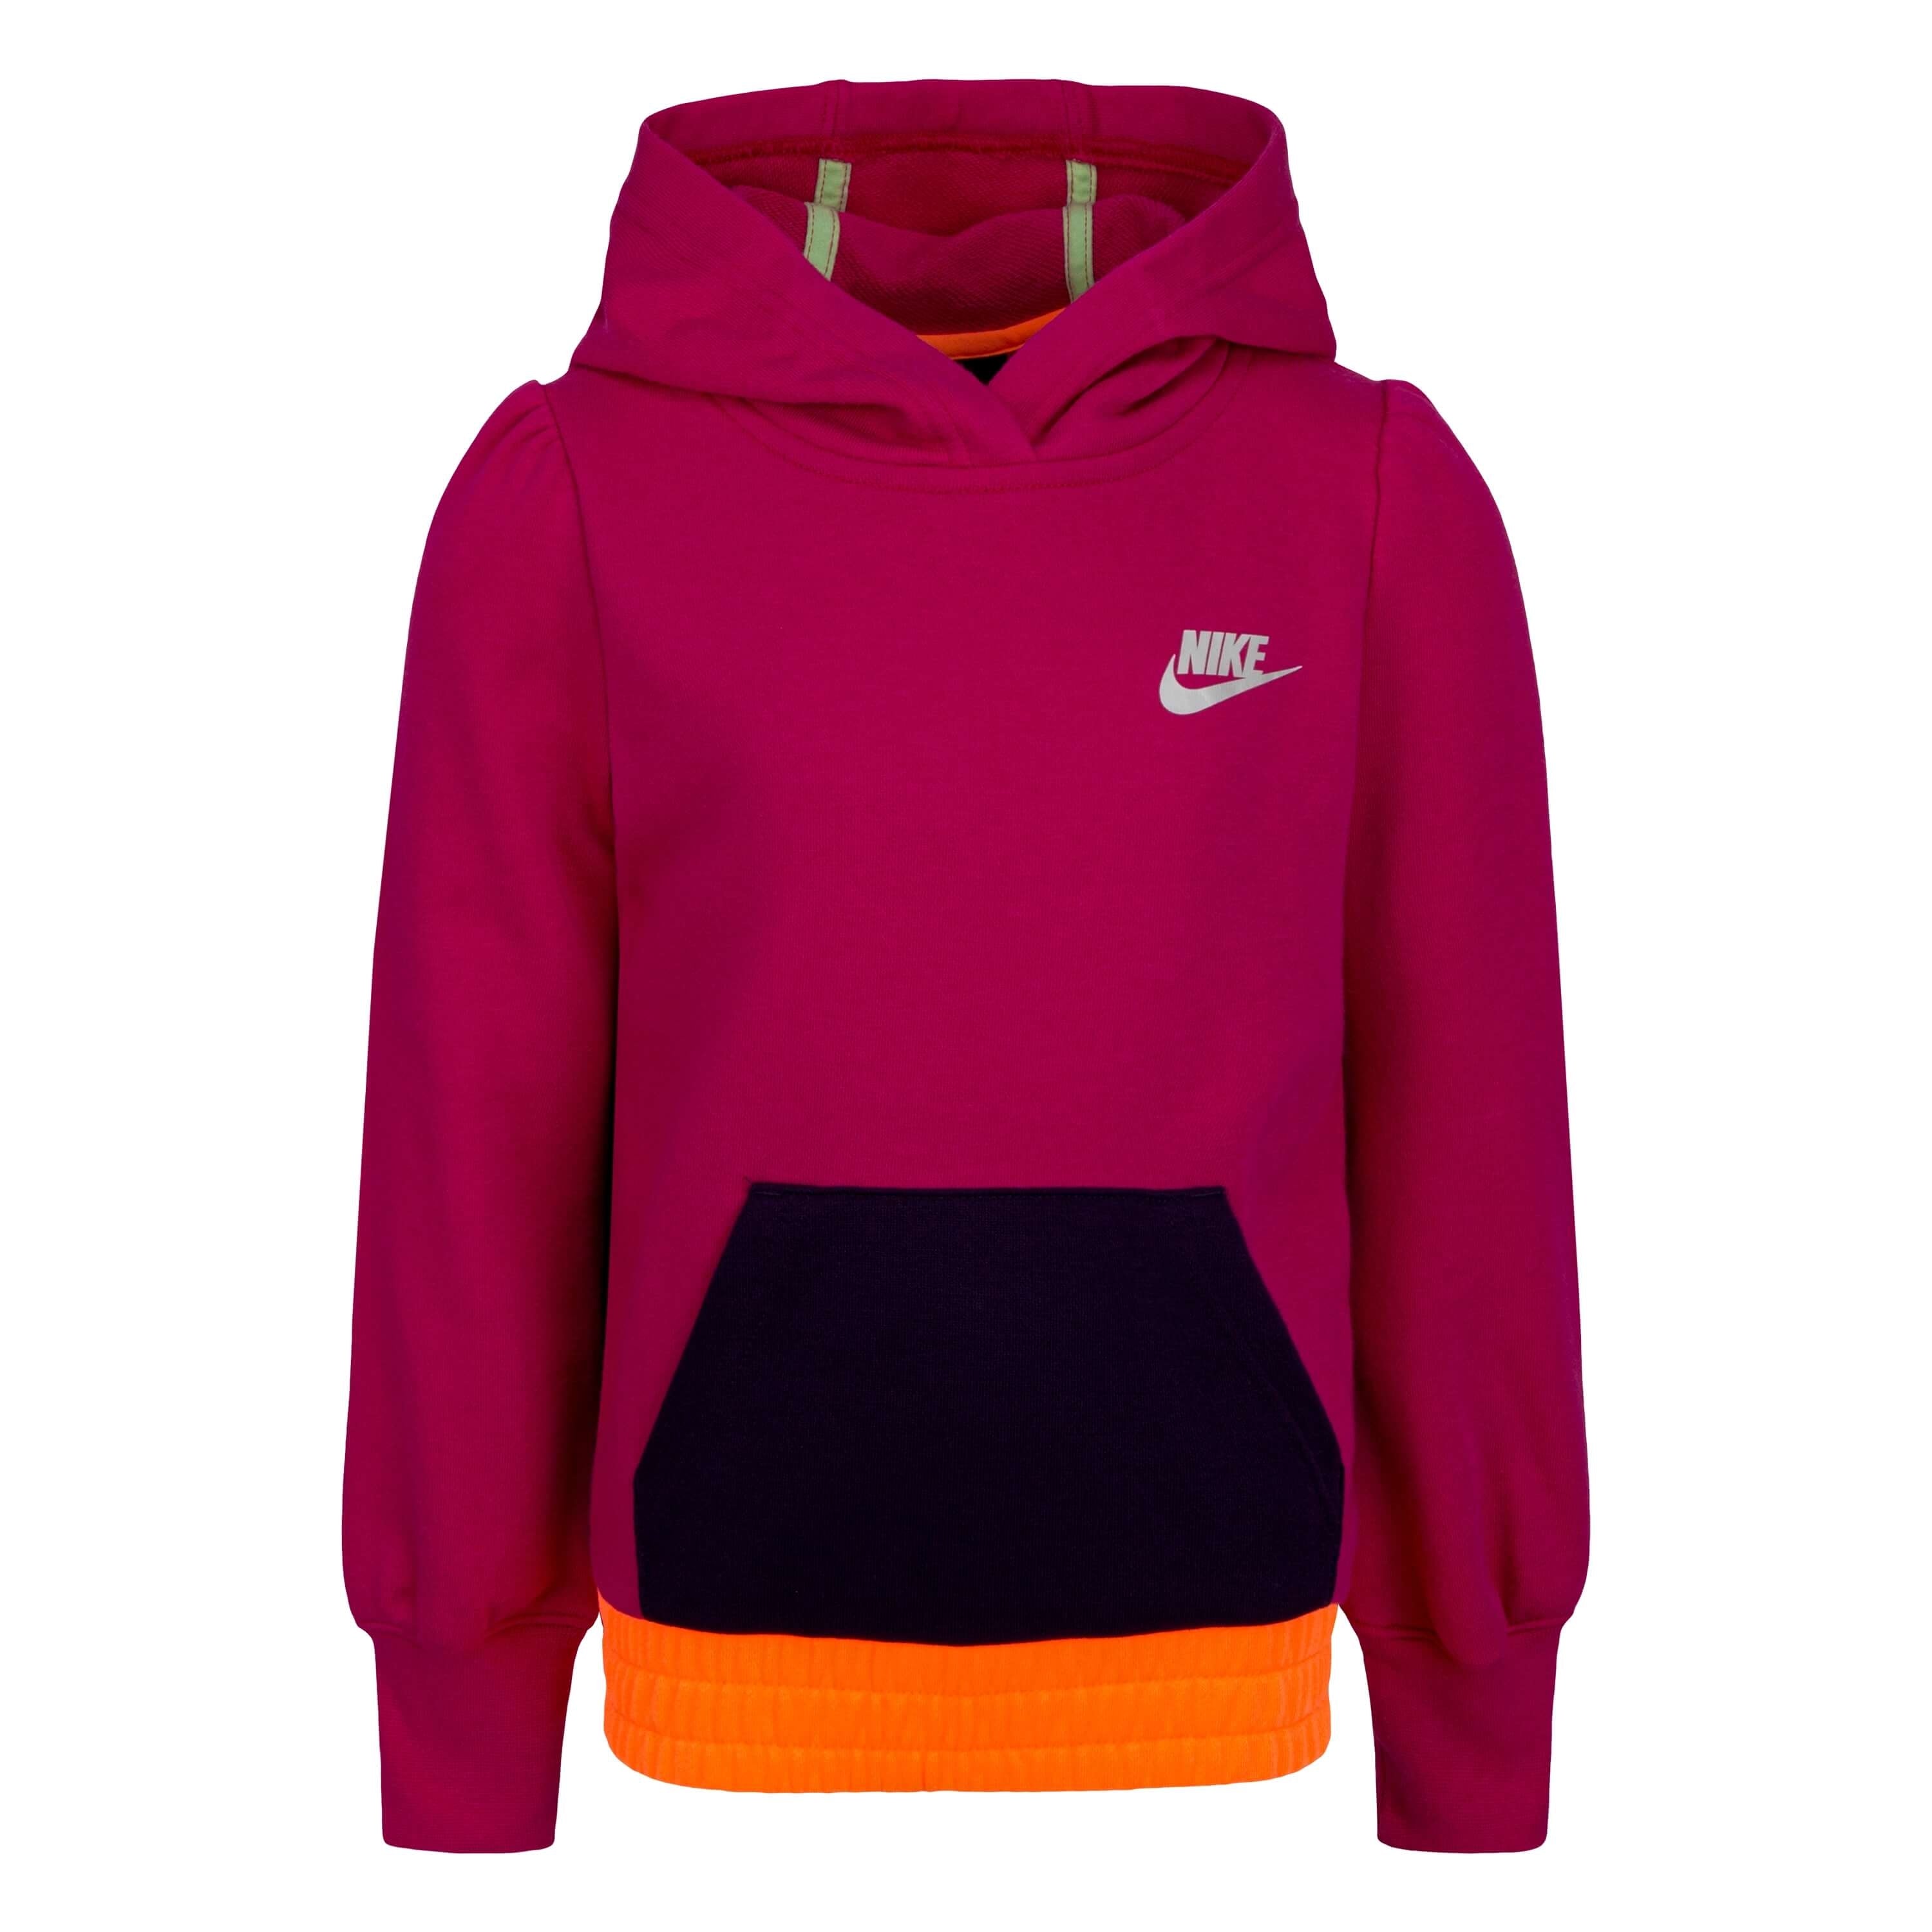 Sweat Capuche Nike Sportswear Enfant Fille - Fushia